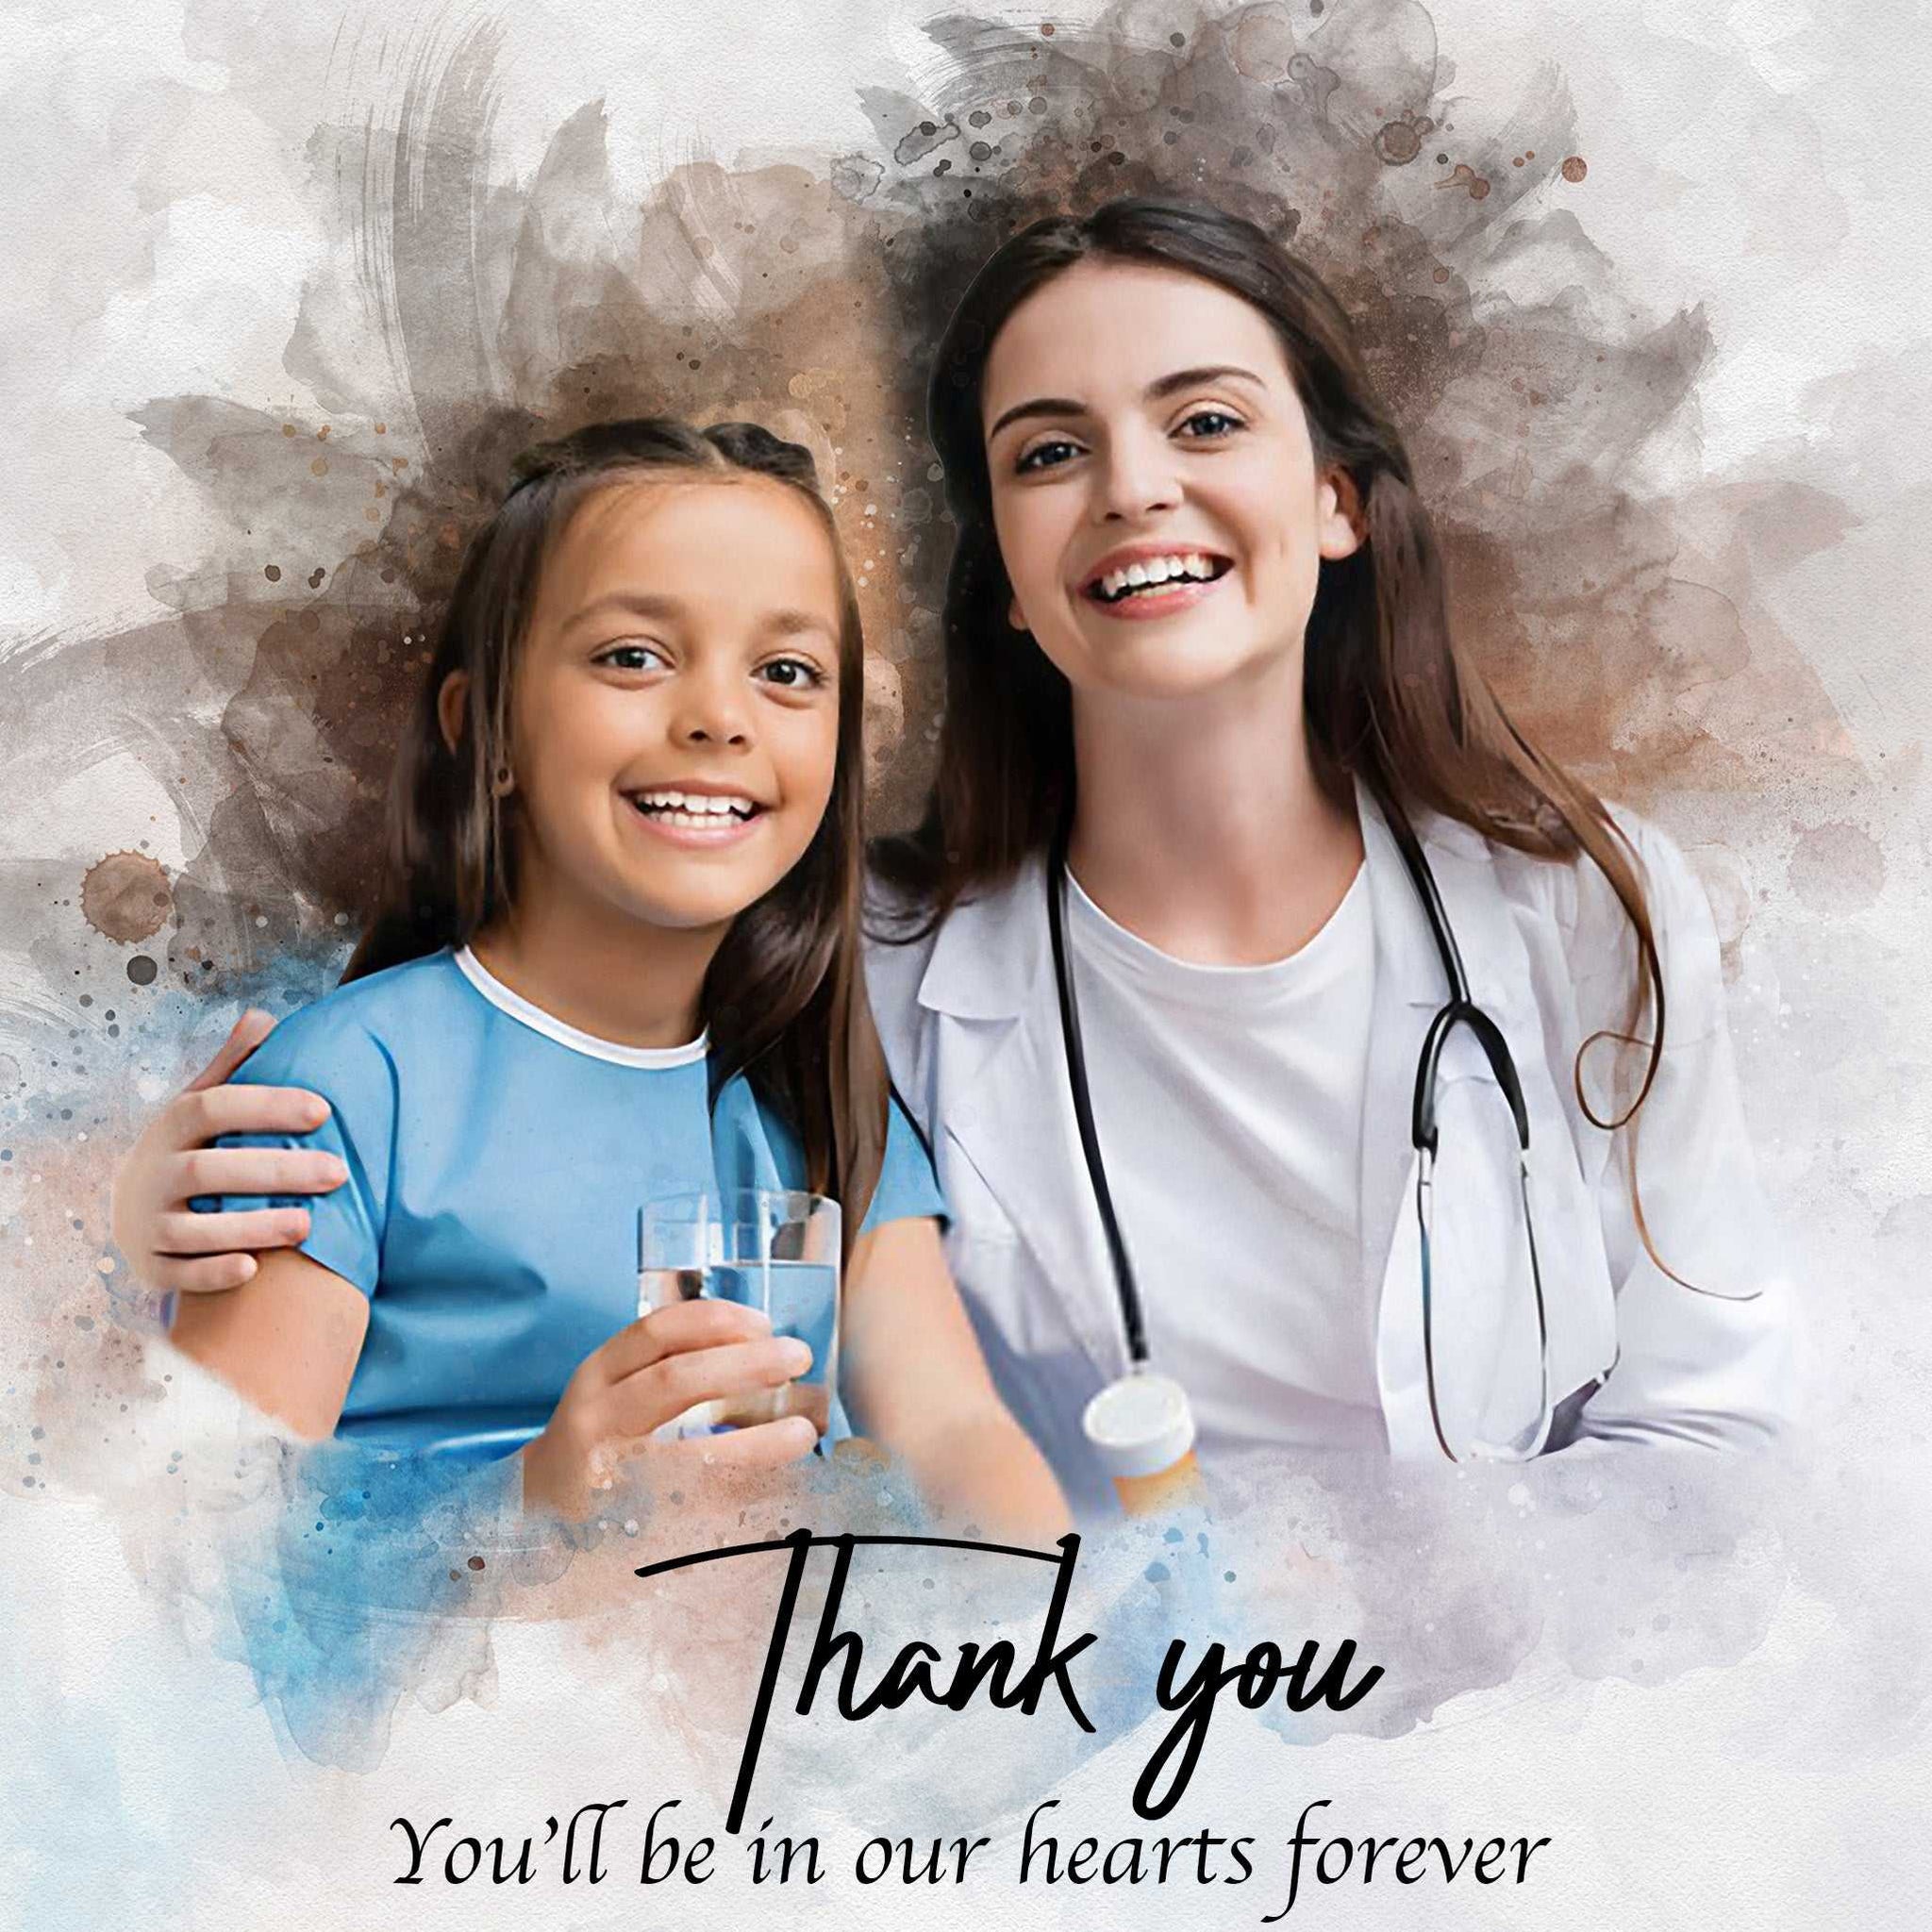 Doctor of Nursing practice Gifts | Appreciation Gifts for Nurses and Doctors | Gifts for Doctors and Nurses - FromPicToArt